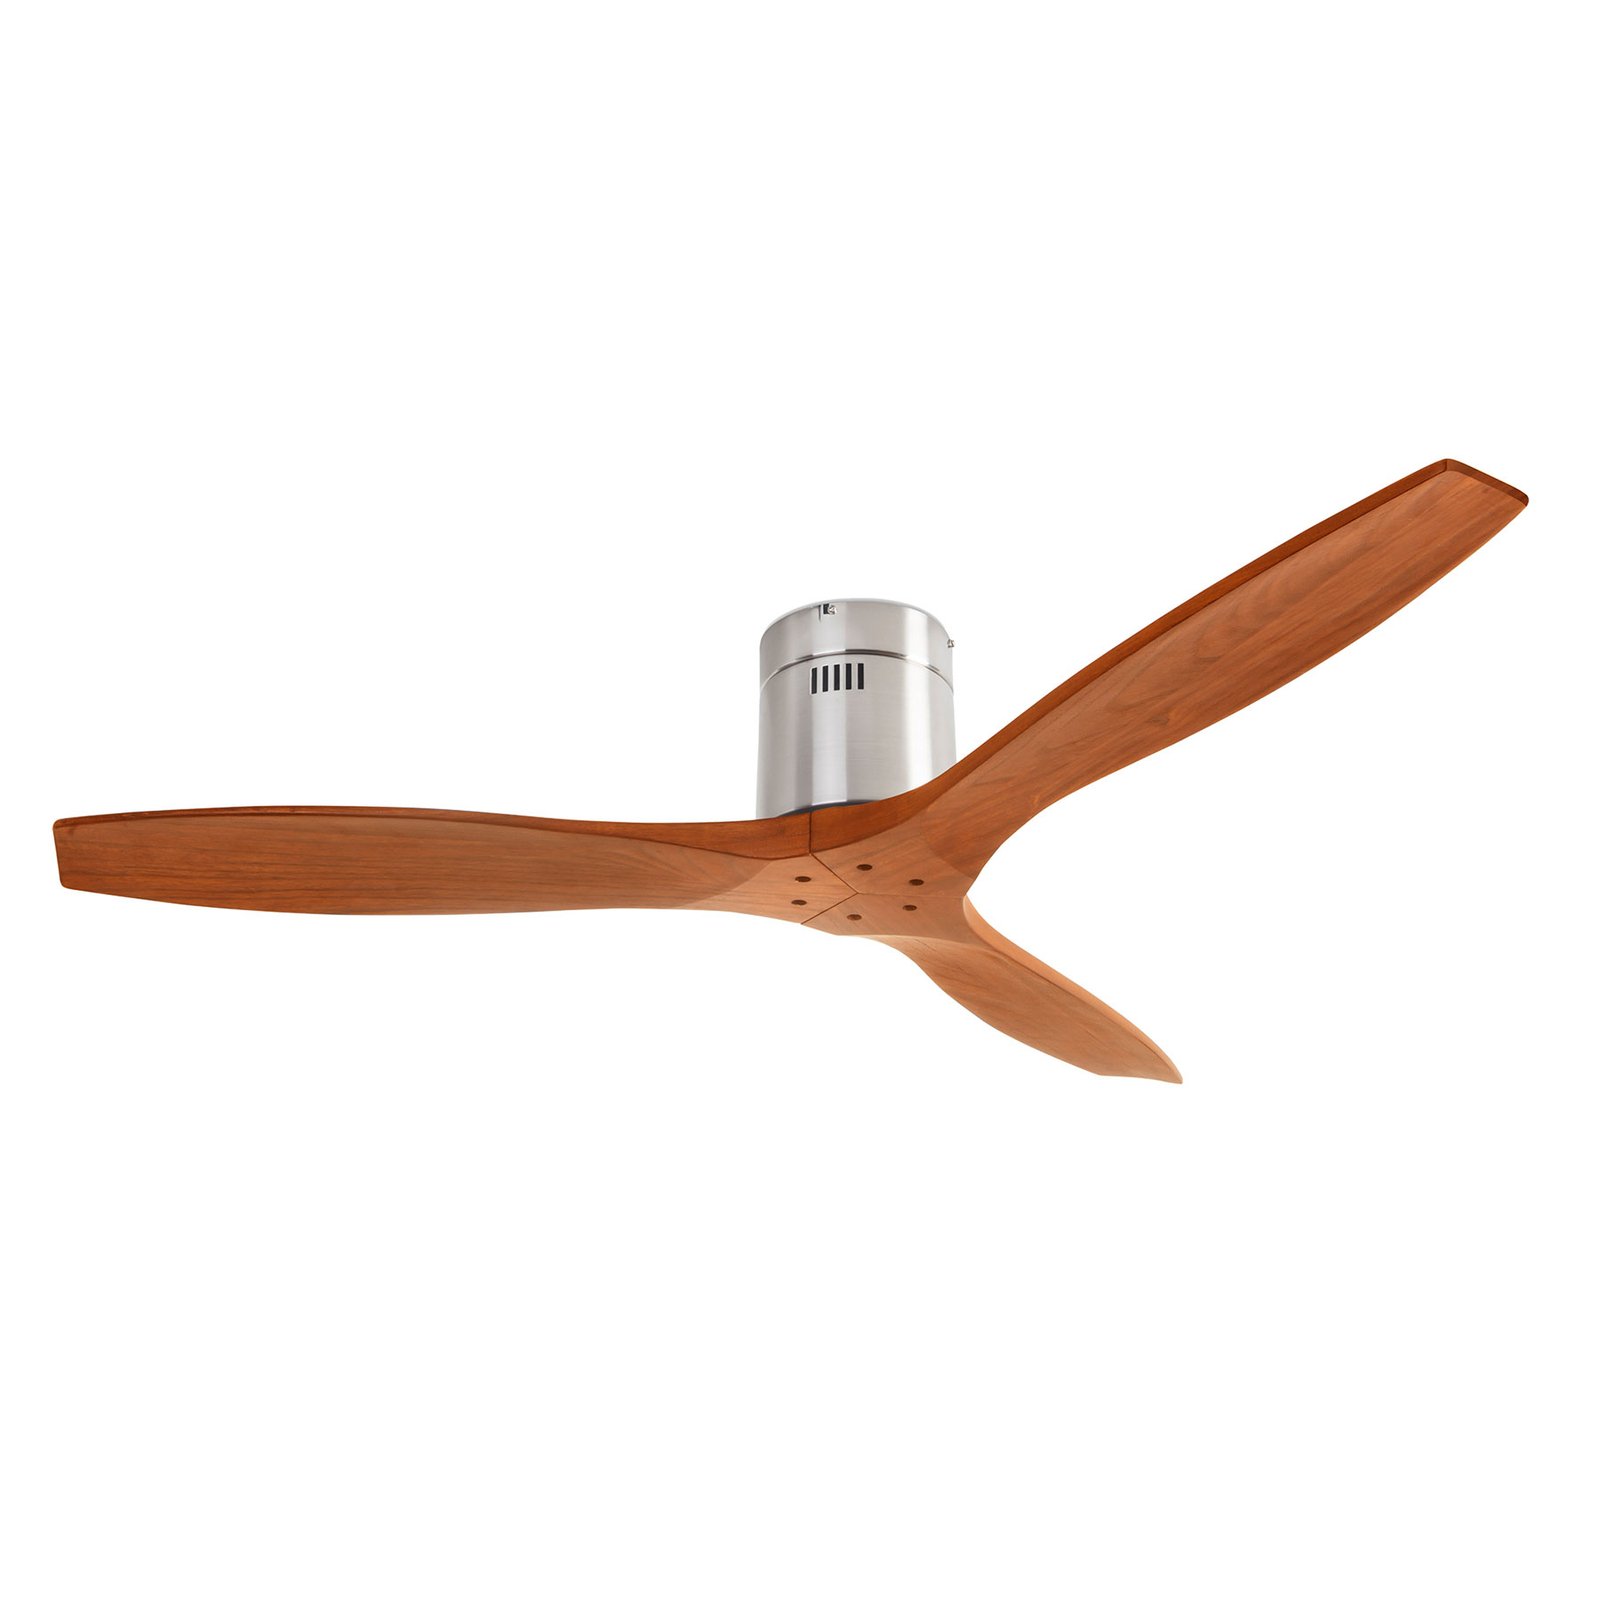 Stem ceiling fan with wooden blades, dark wood